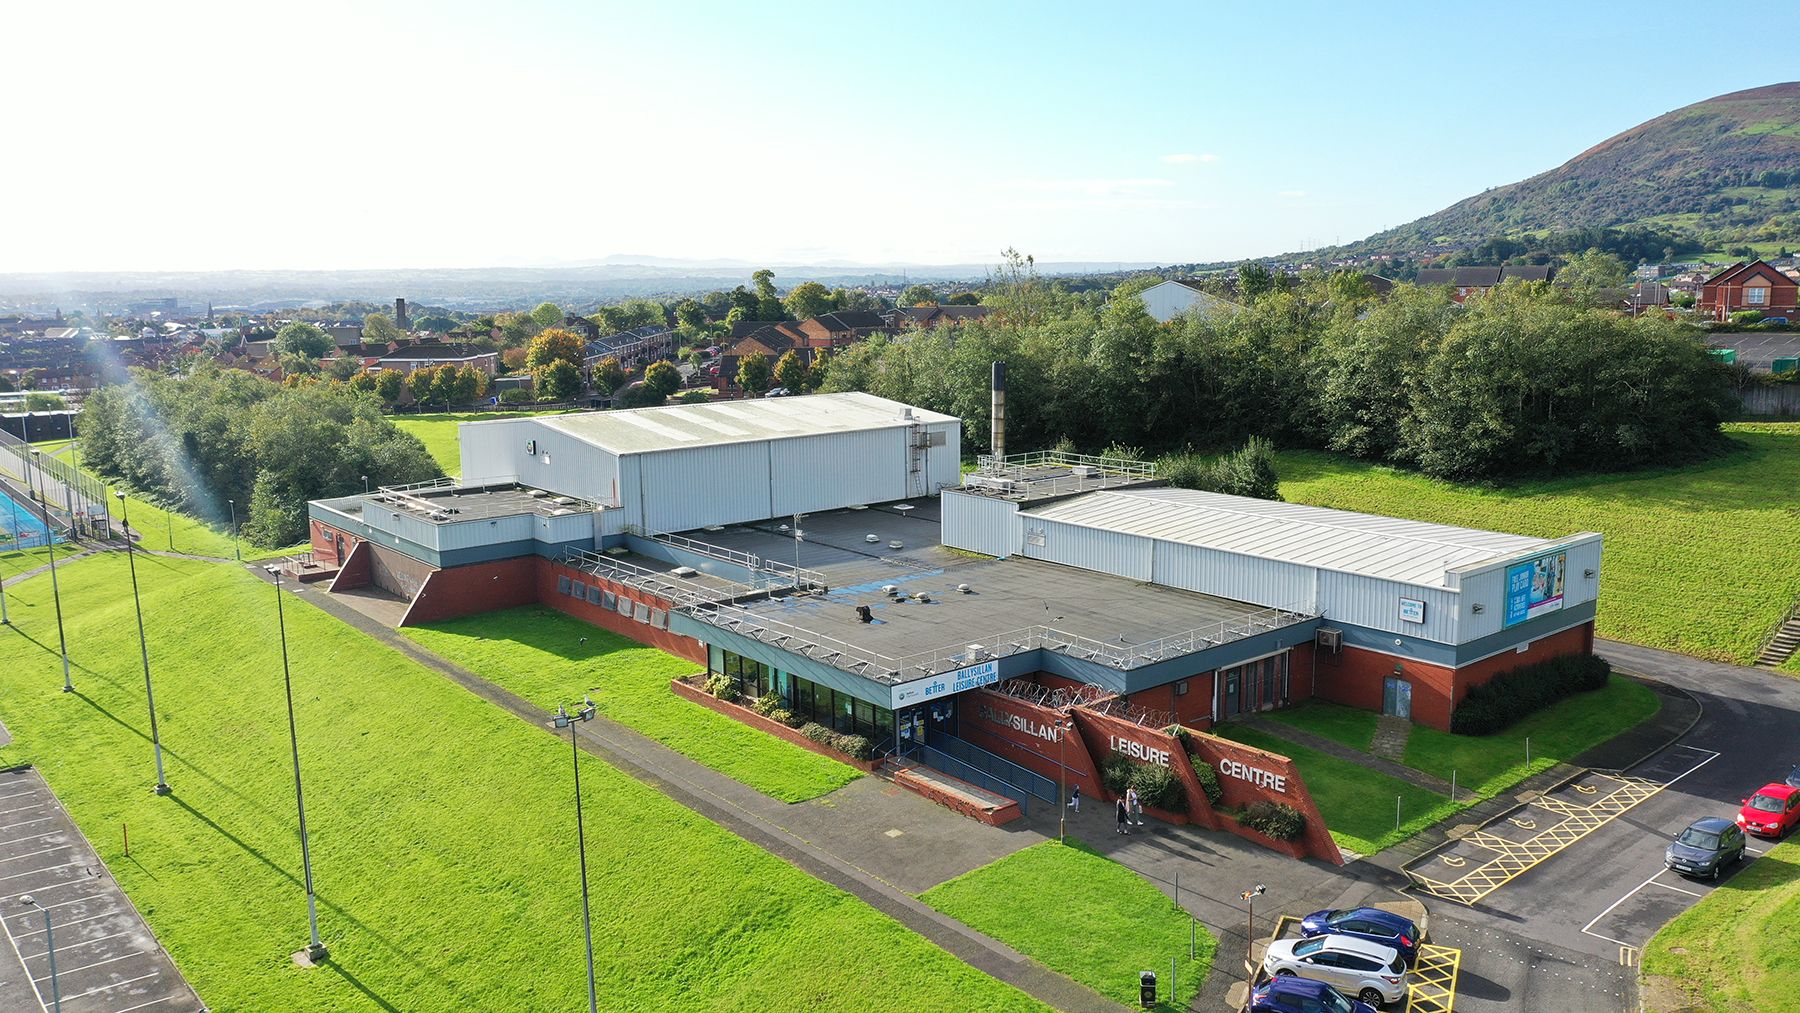 IMPRESSIVE: Ballysillan Leisure Centre in North Belfast is a vital community hub